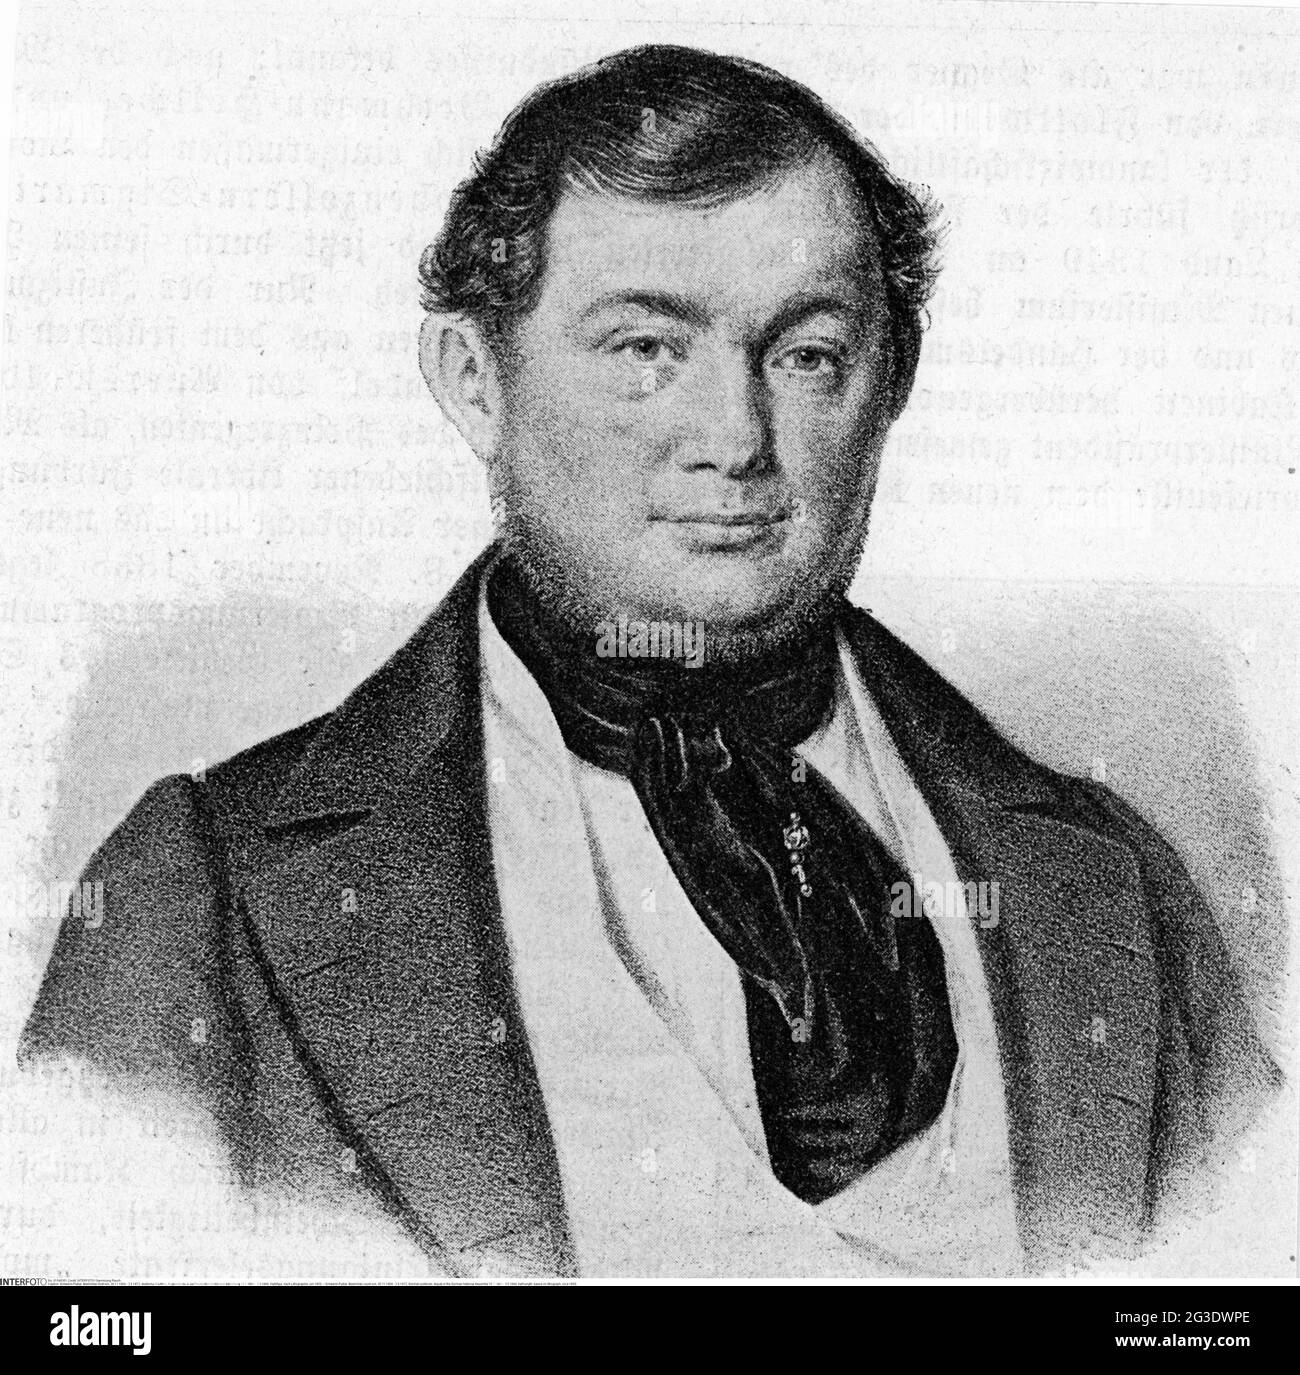 Schwerin-Putzar, Maximilian count von, 30.11.1804 - 2.5.1872, German politician, ARTIST'S COPYRIGHT HAS NOT TO BE CLEARED Stock Photo